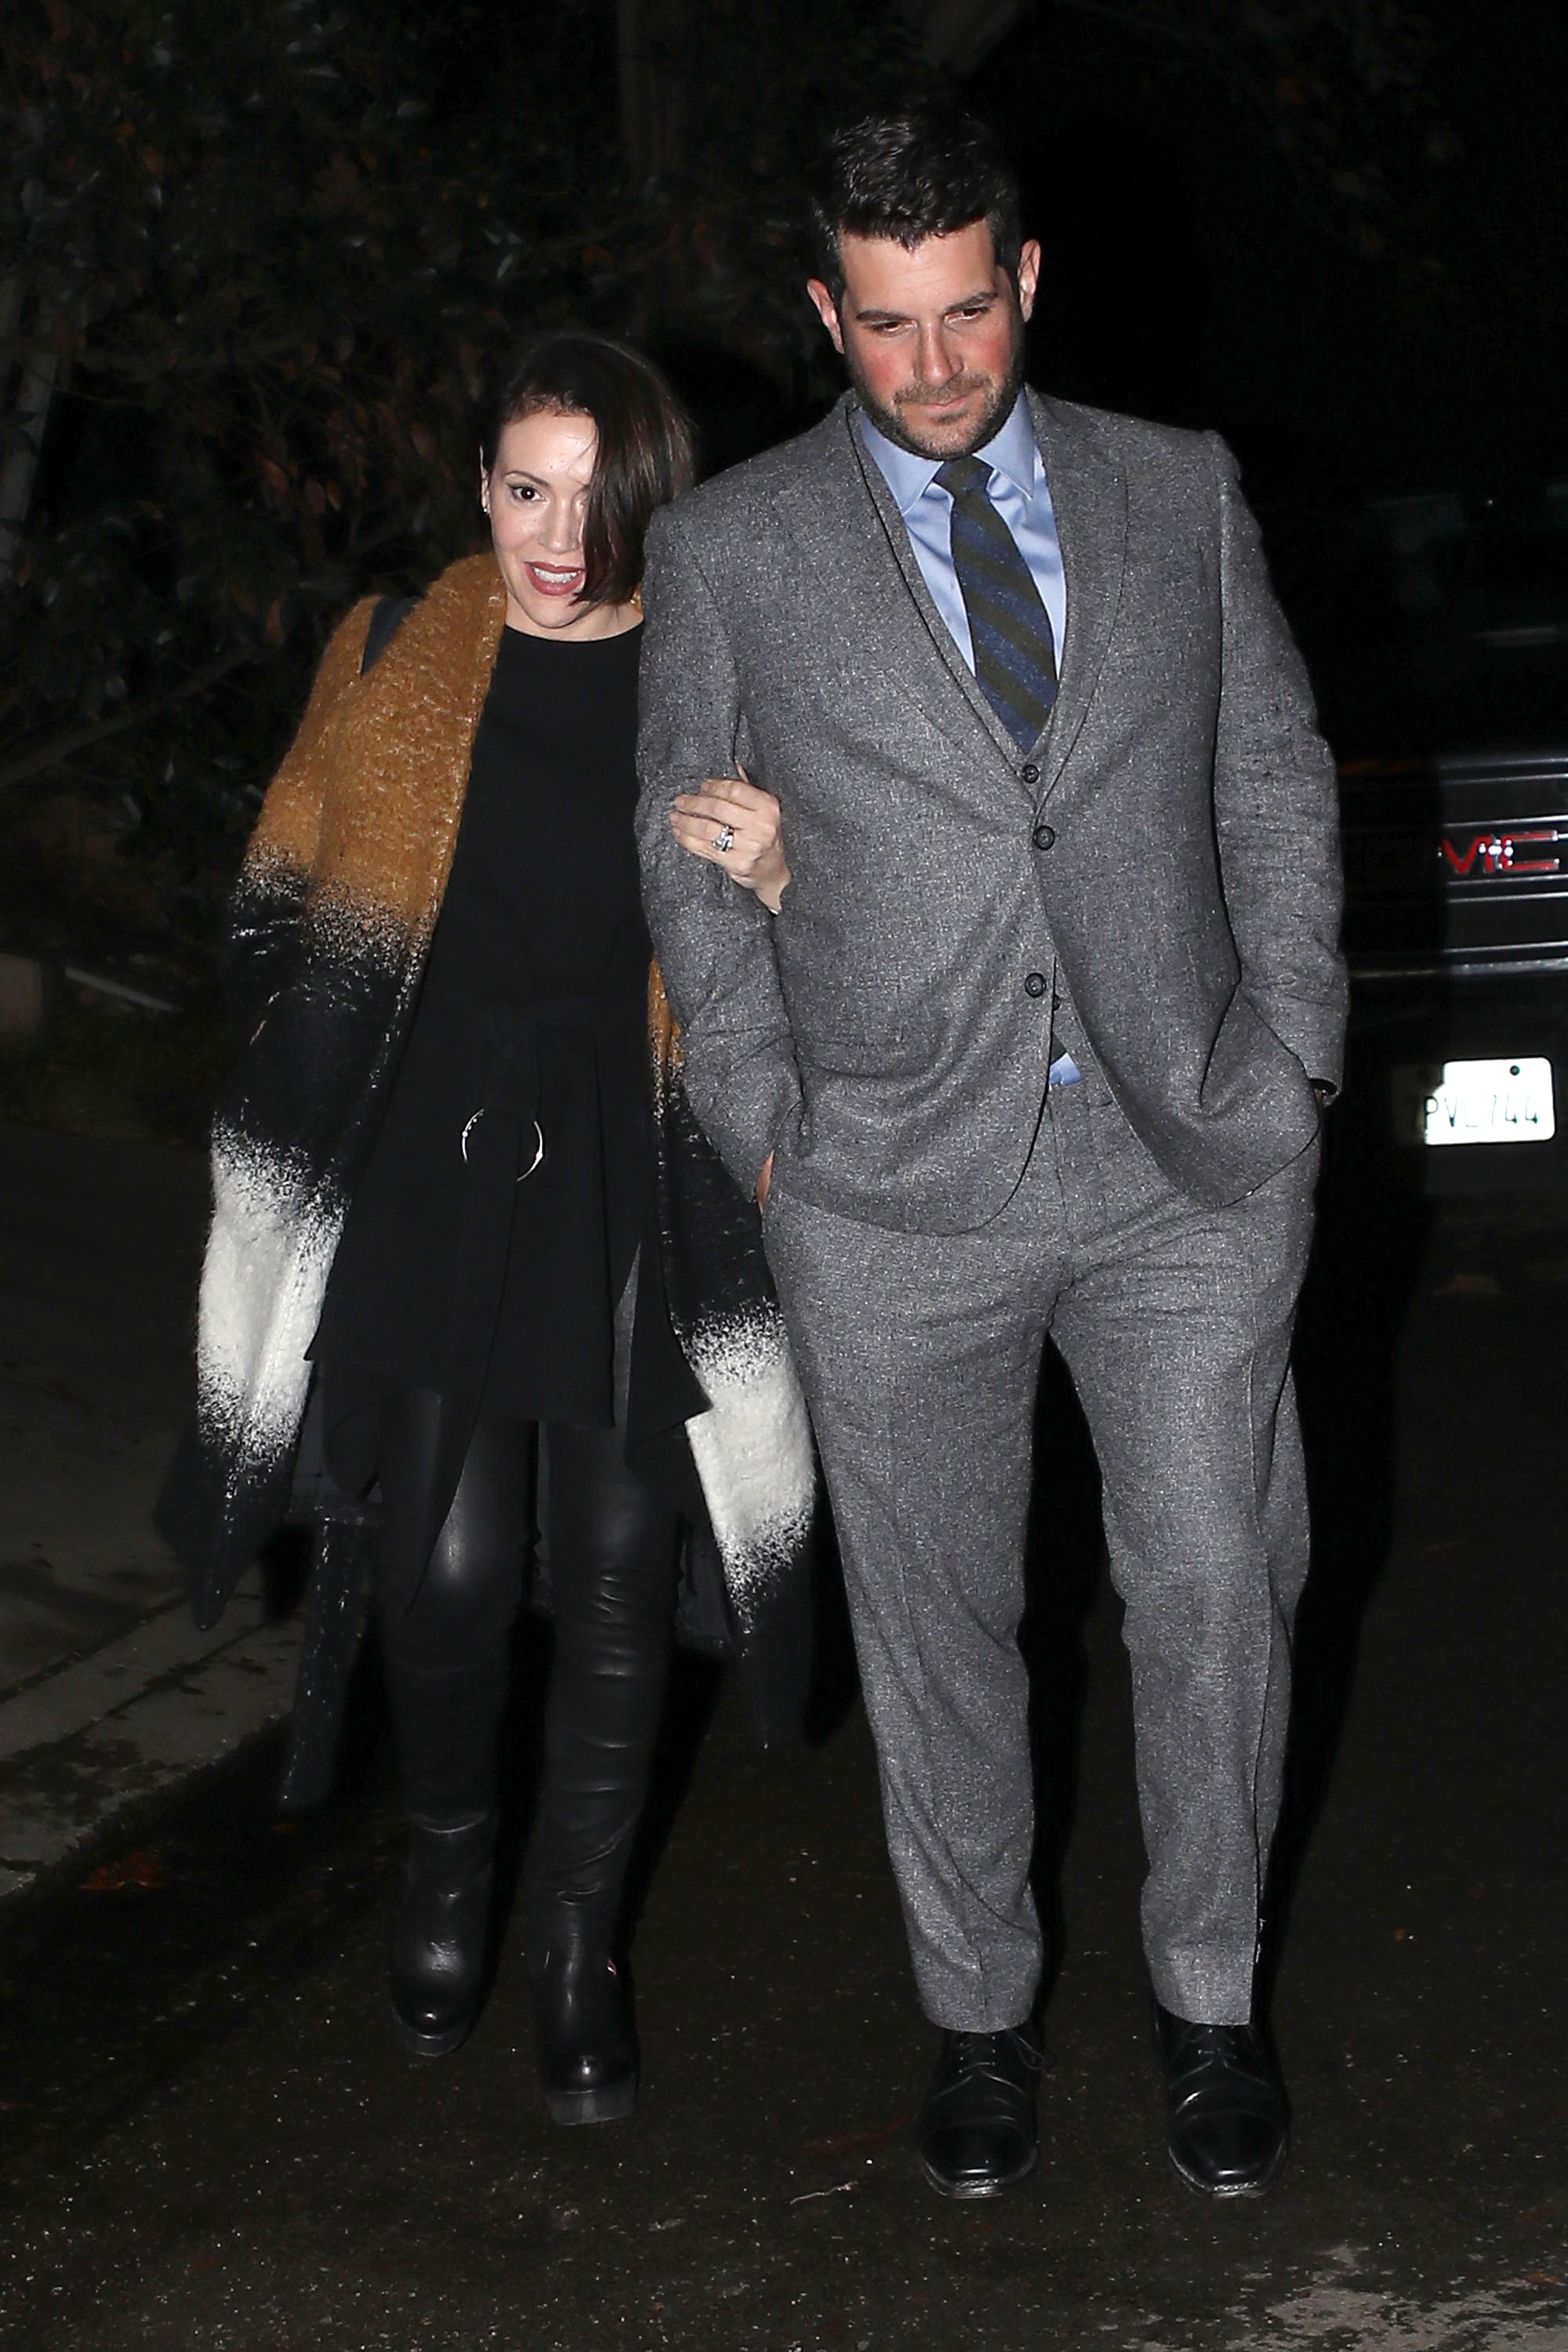 Alyssa Milano attends Bradley Cooper’s star-studded 42nd birthday